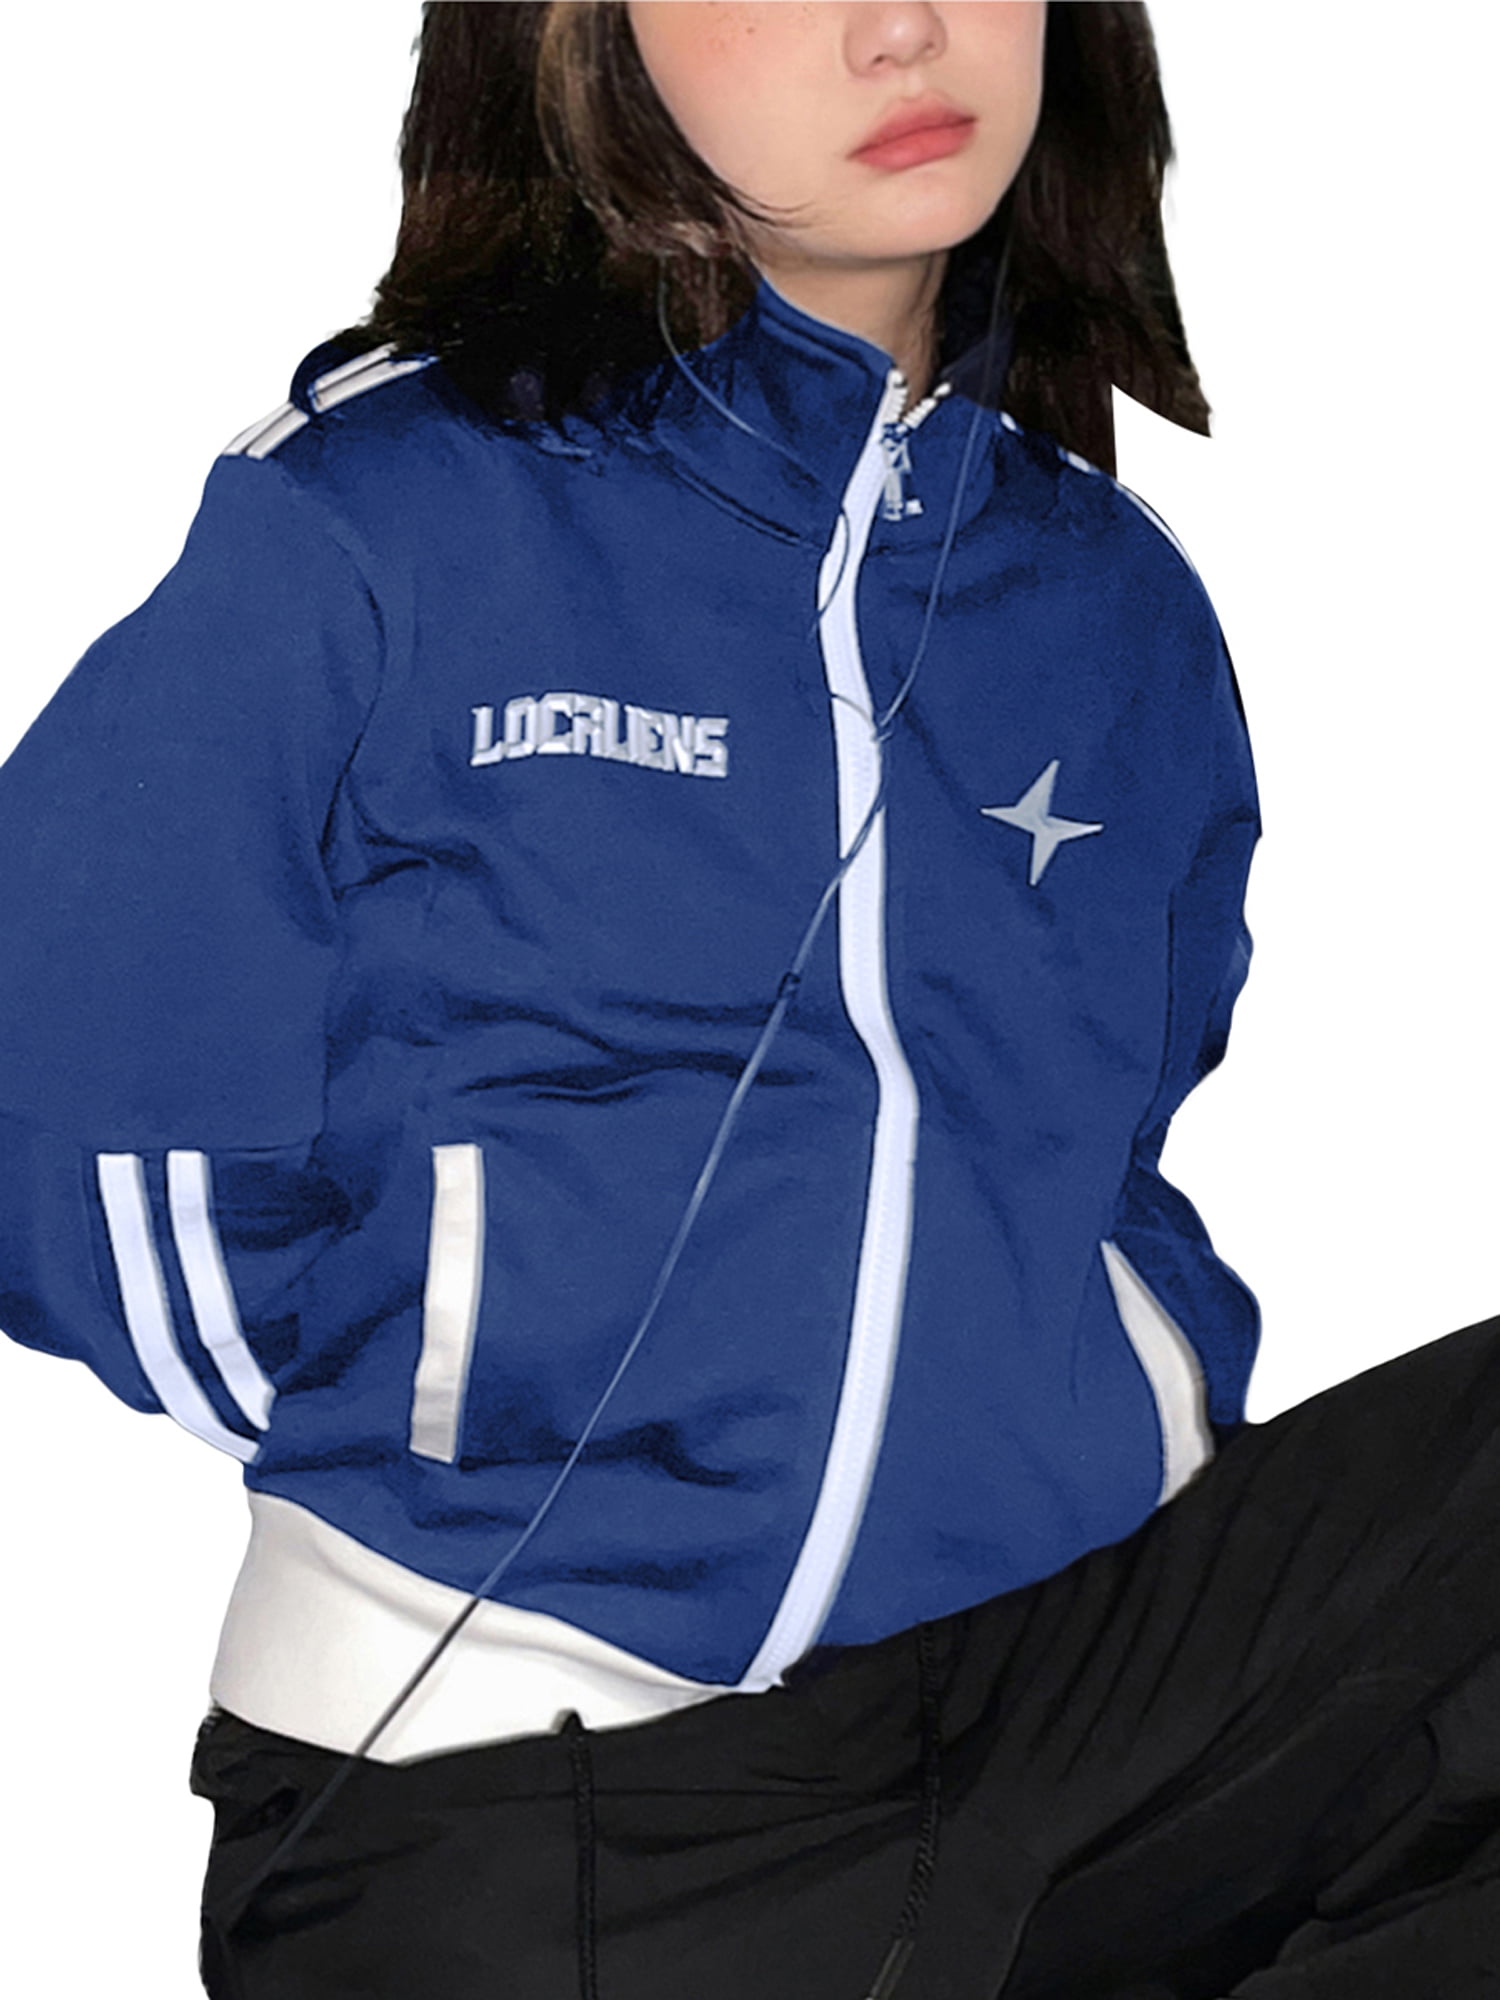 Sunisery Women Zip Up Short Jackets Stand Collar Tracksuit Long Sleeve  Racing Jacket Sweatshirt Tops Streetwear Navy Blue M